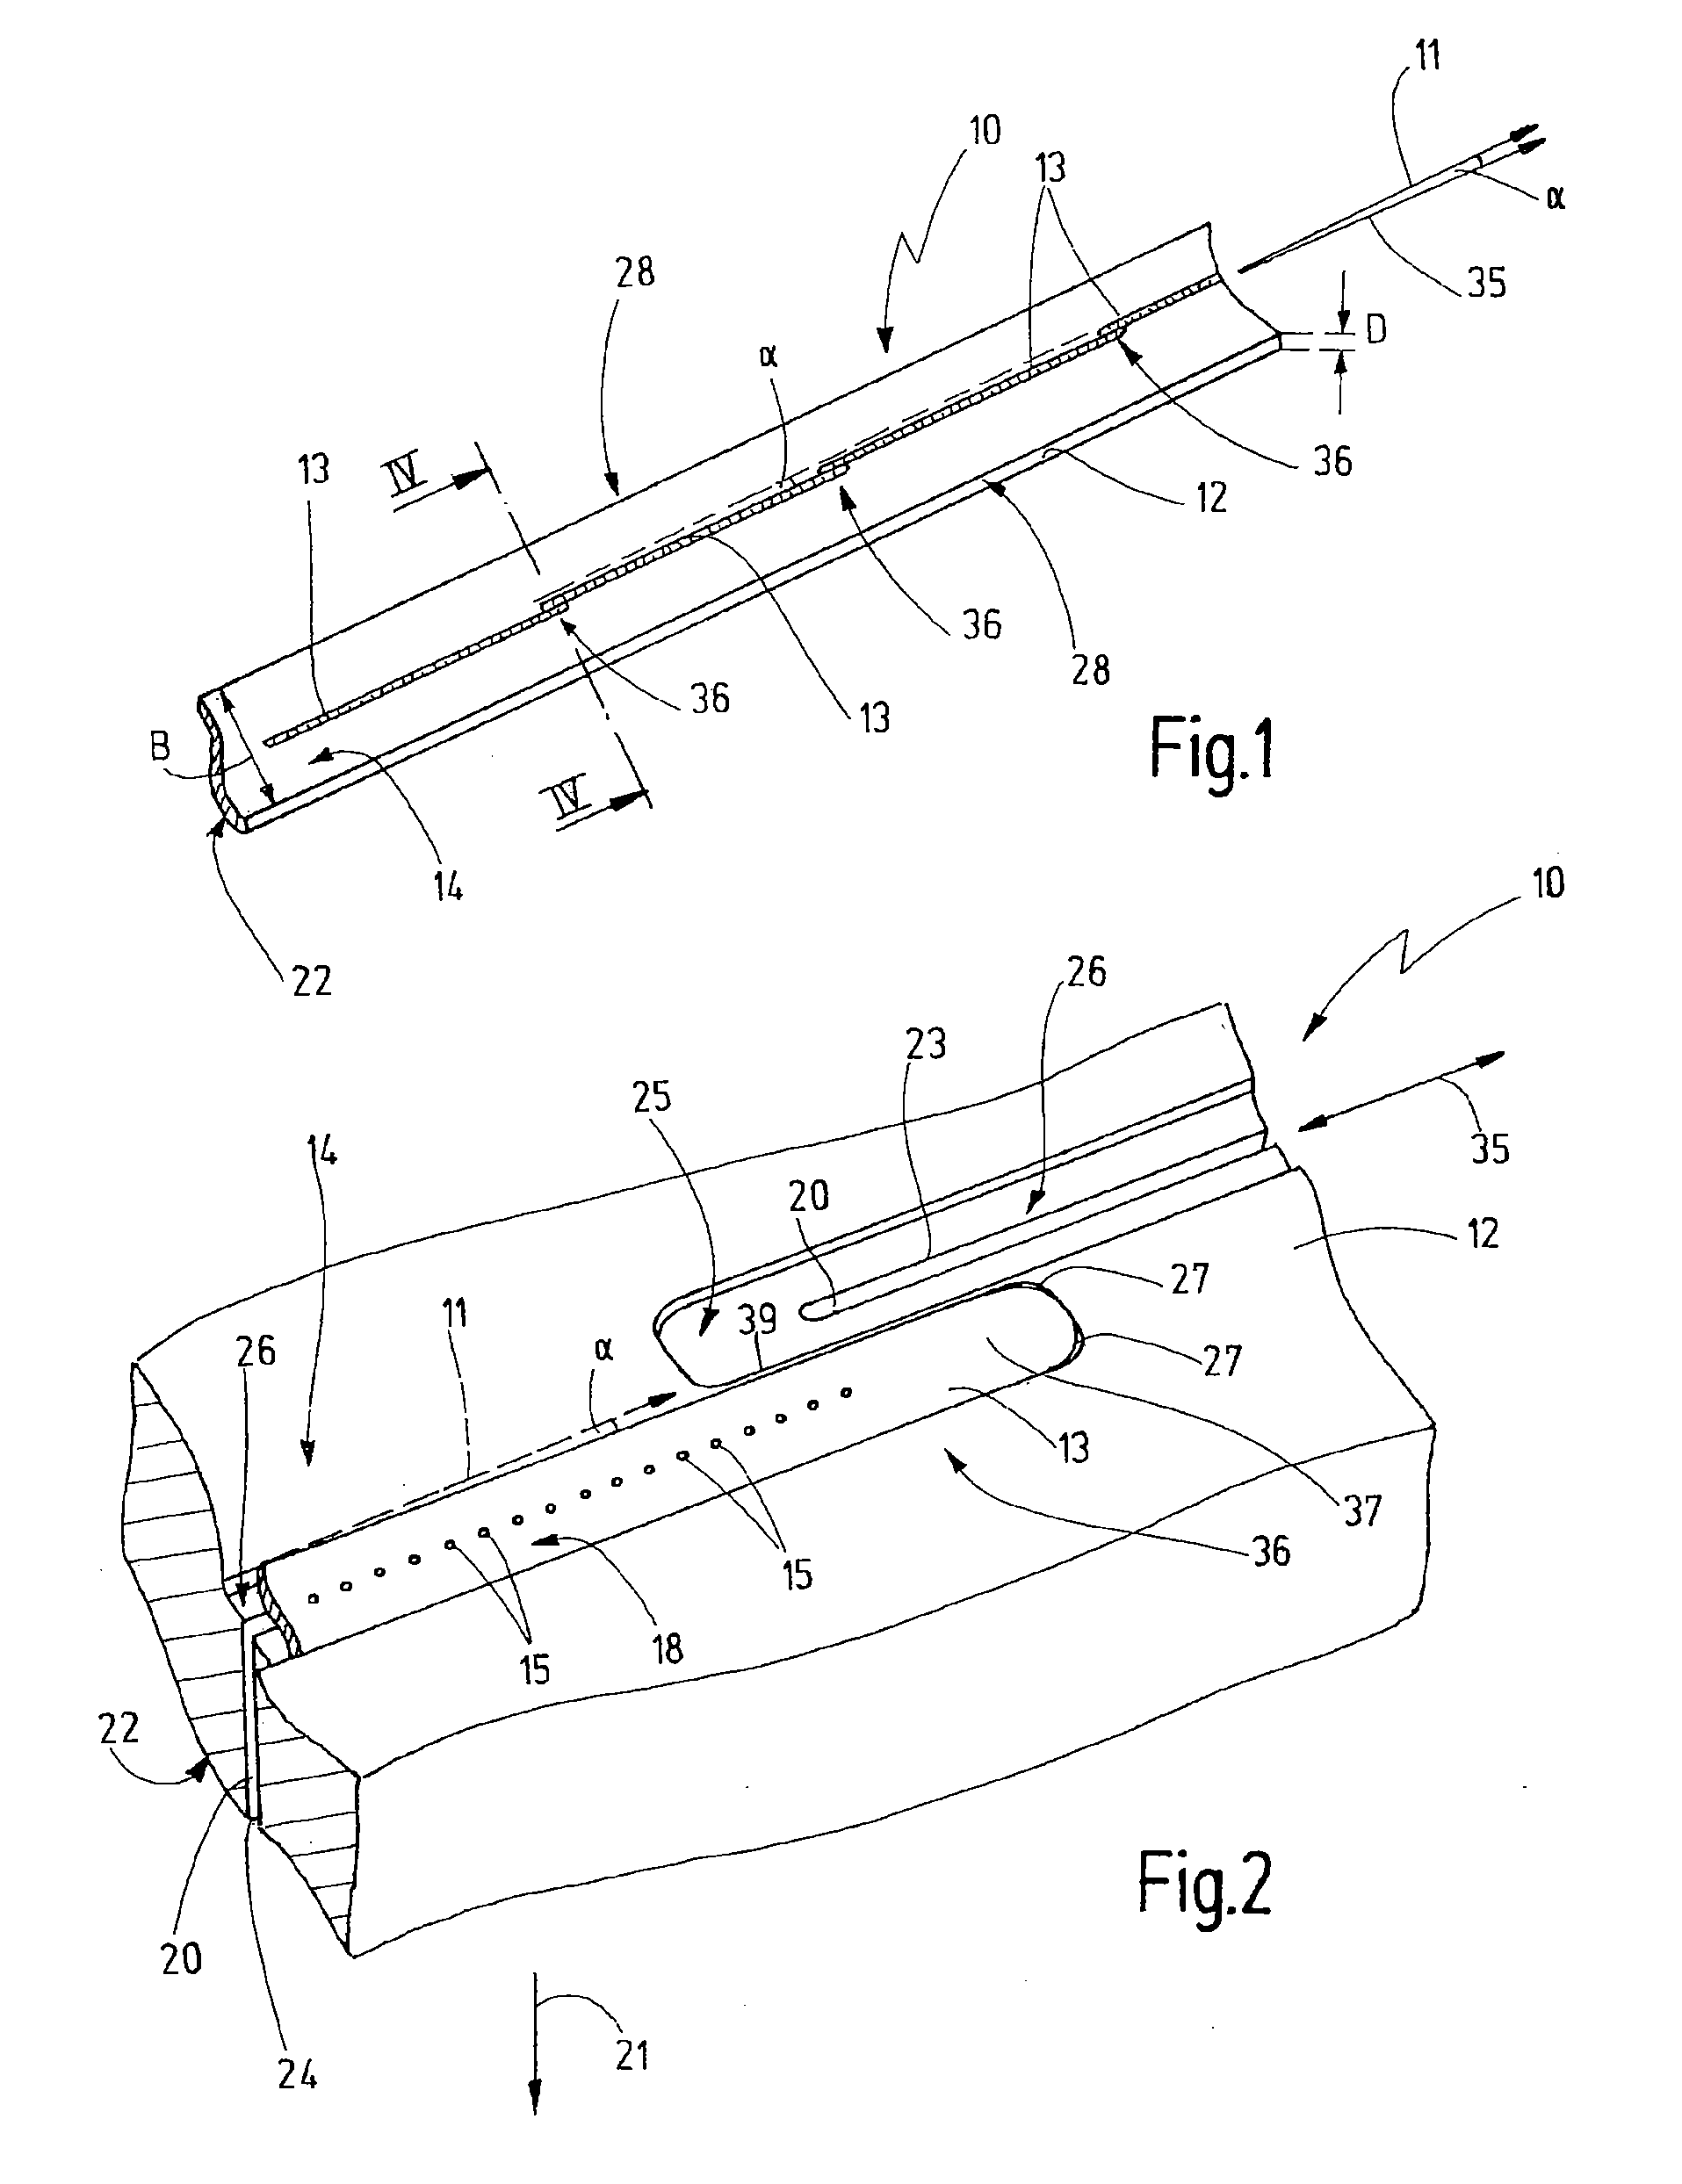 Nozzle bar for a textile processing machine